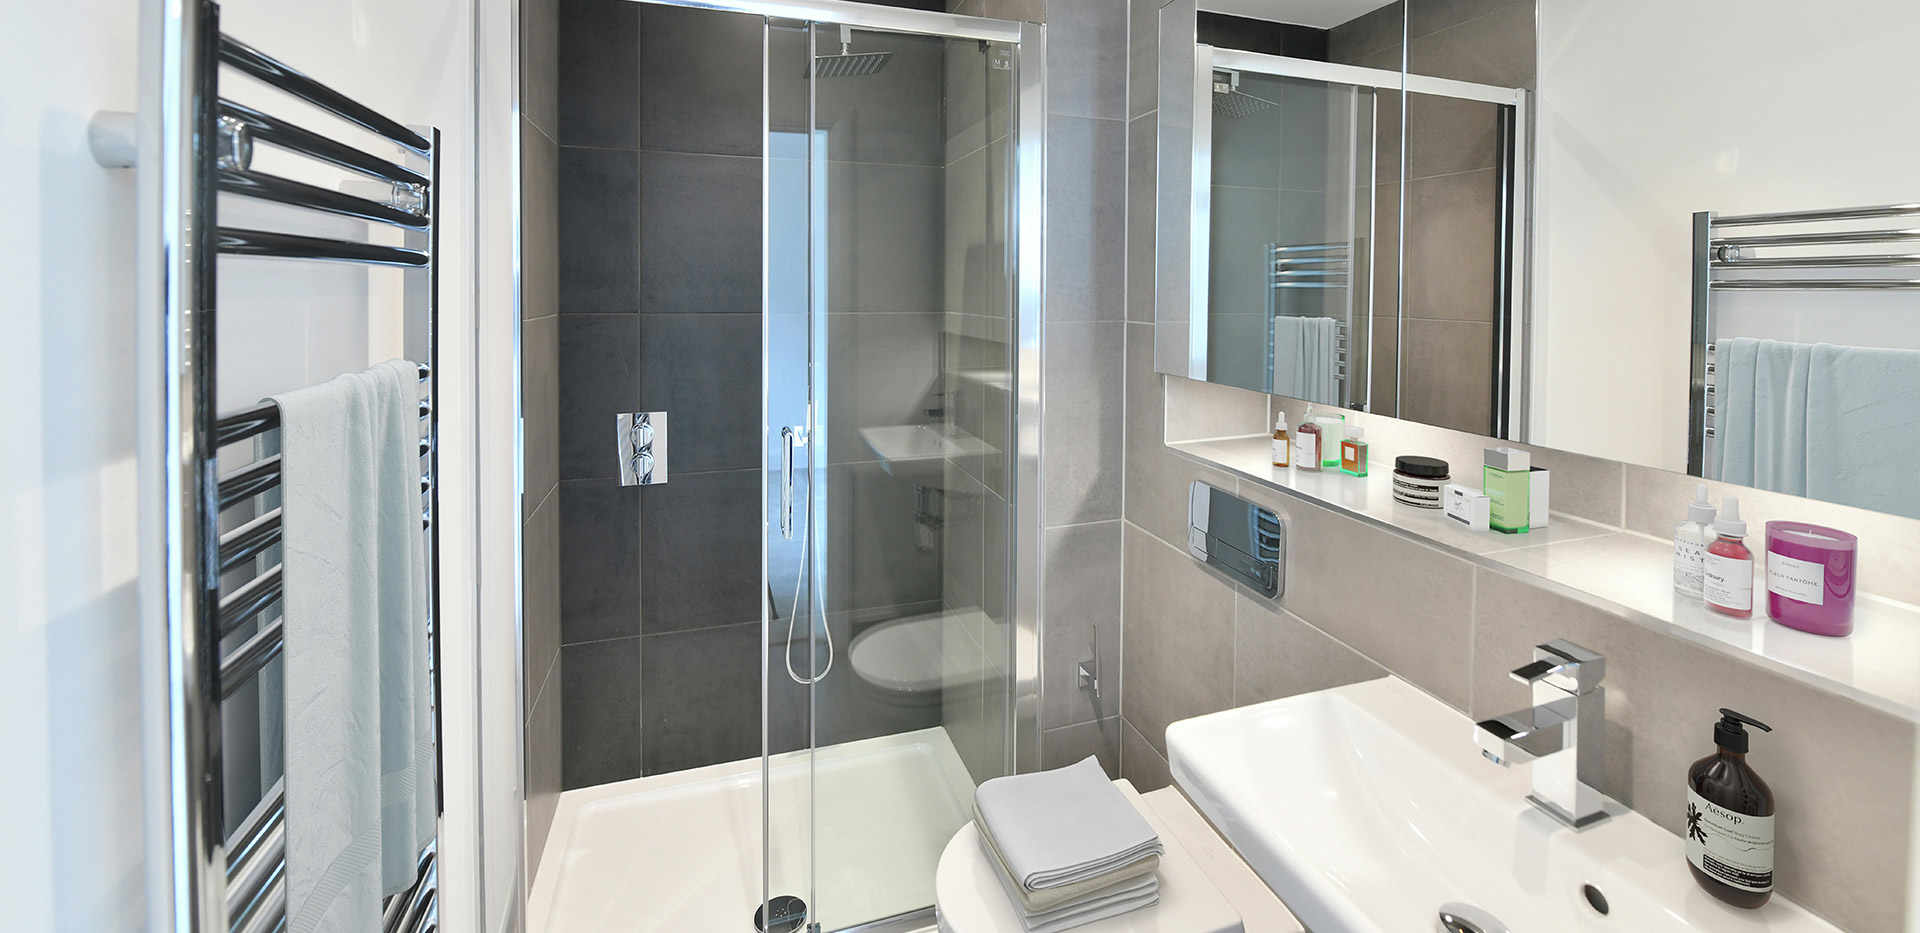 Berkeley, Royal Wells Park, Apartment Interiors, Shower Room